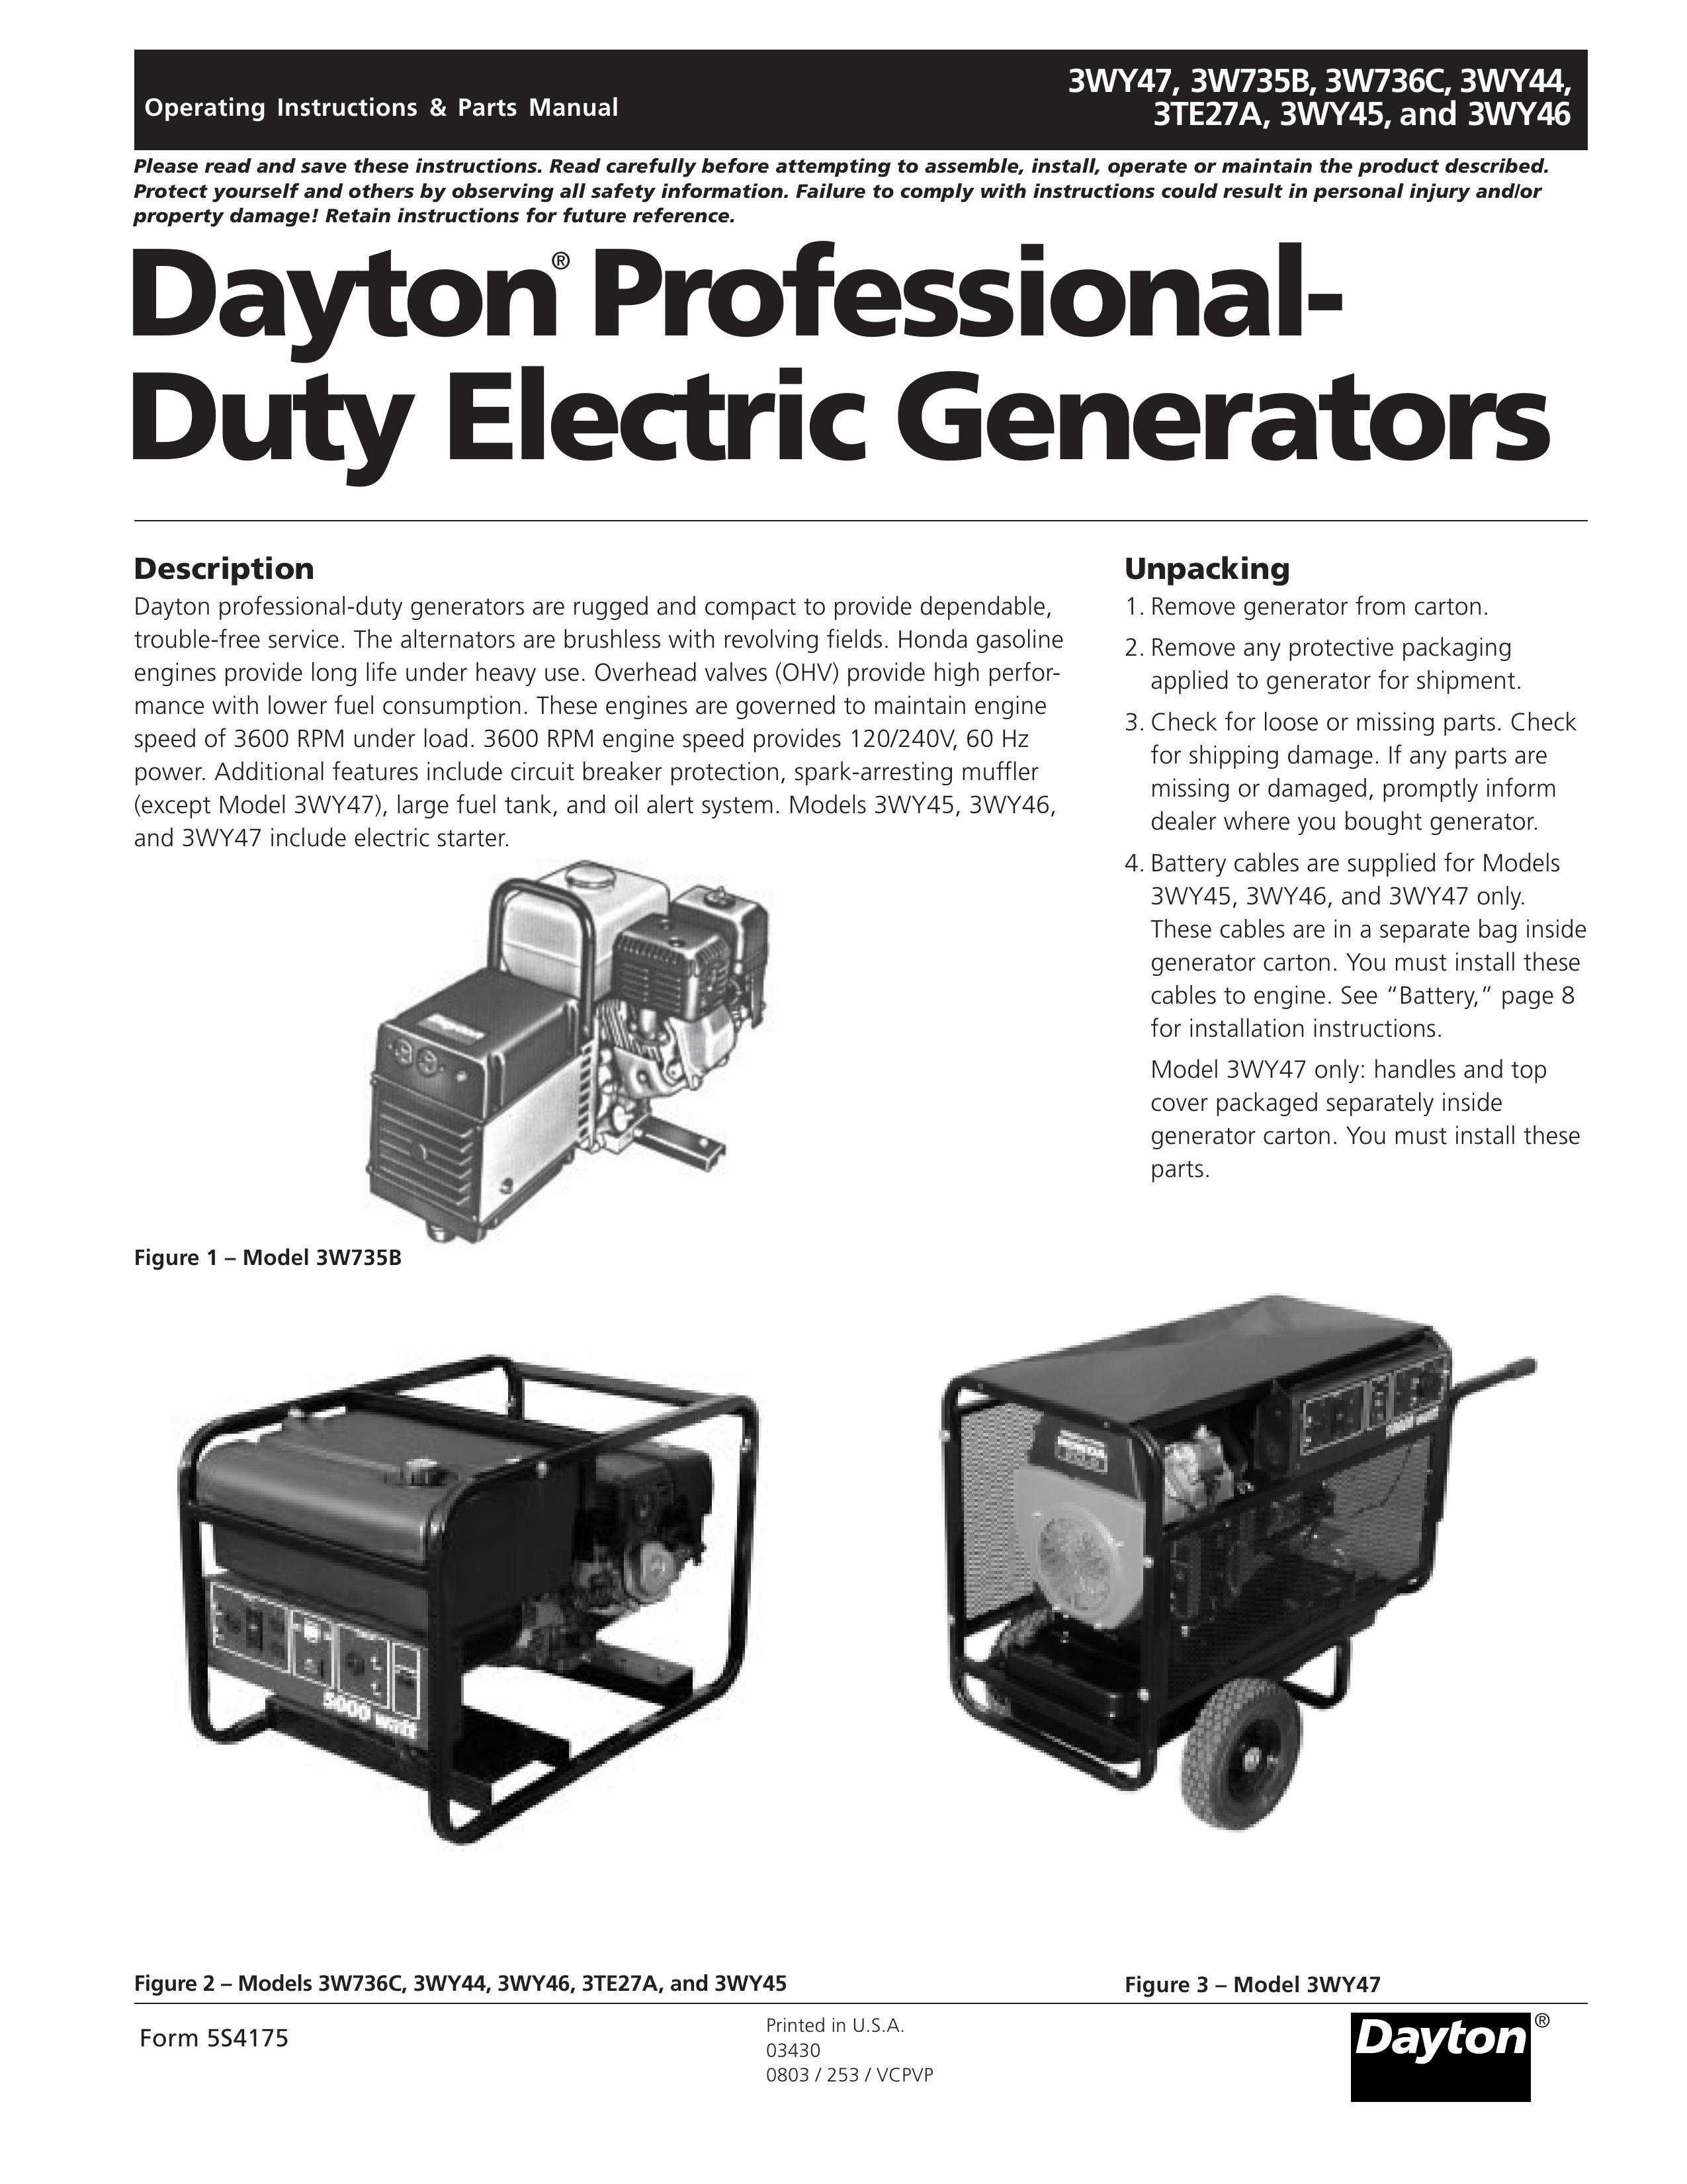 Dayton 3WY47 Portable Generator User Manual